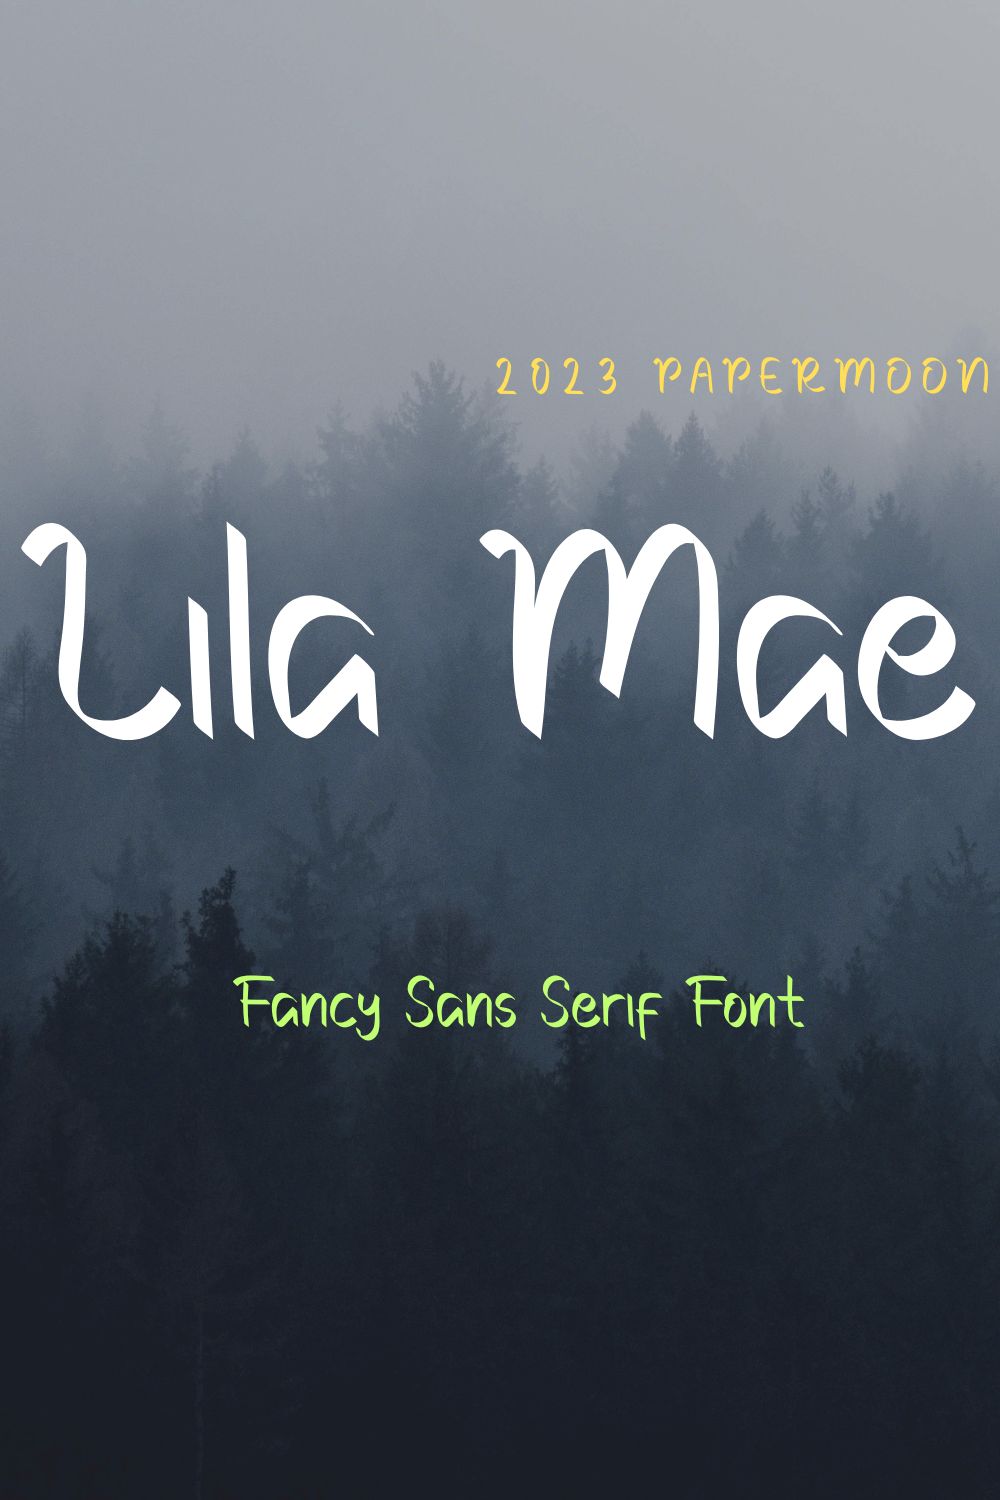 Lila Mae Fancy Sans Serif Font pinterest preview image.